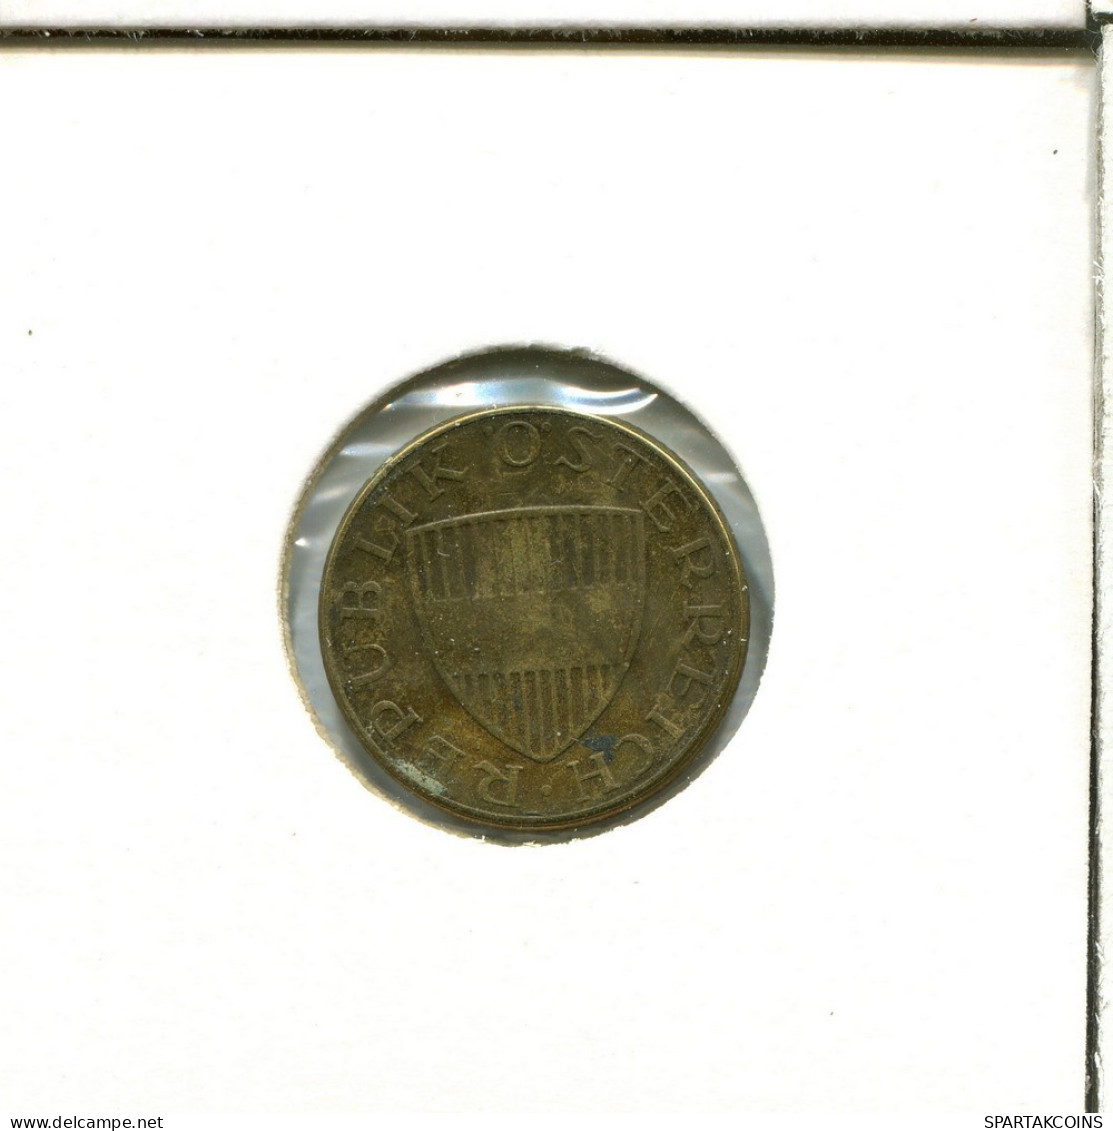 50 GROSCHEN 1973 AUSTRIA Coin #AV057.U.A - Austria